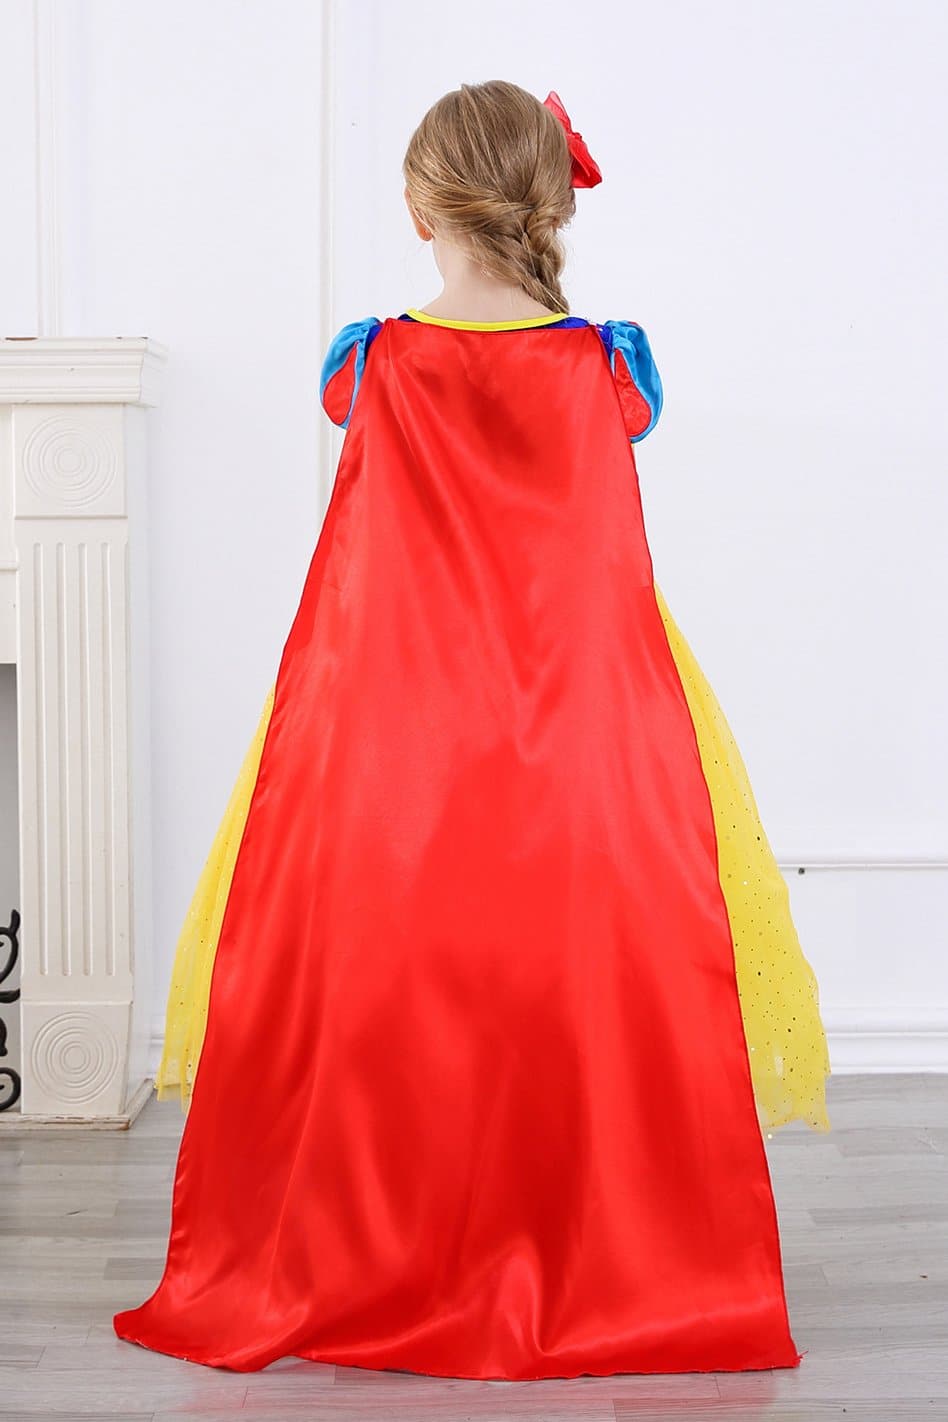 Snow White Princess Dress For Girls